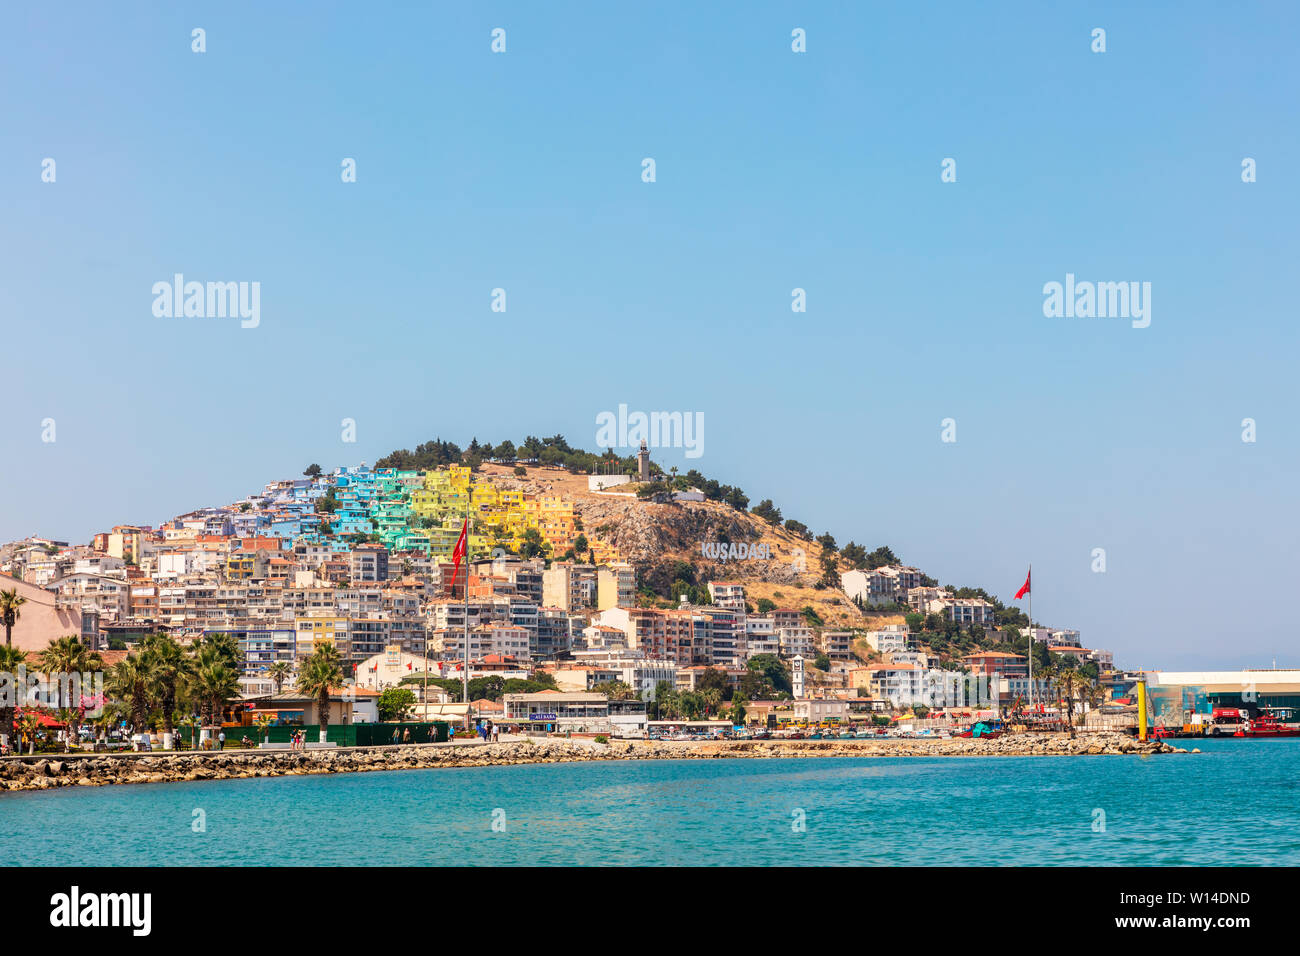 Scenic view of a beach resort town Kusadasi on Turkey's Western Aegean coast. Stock Photo